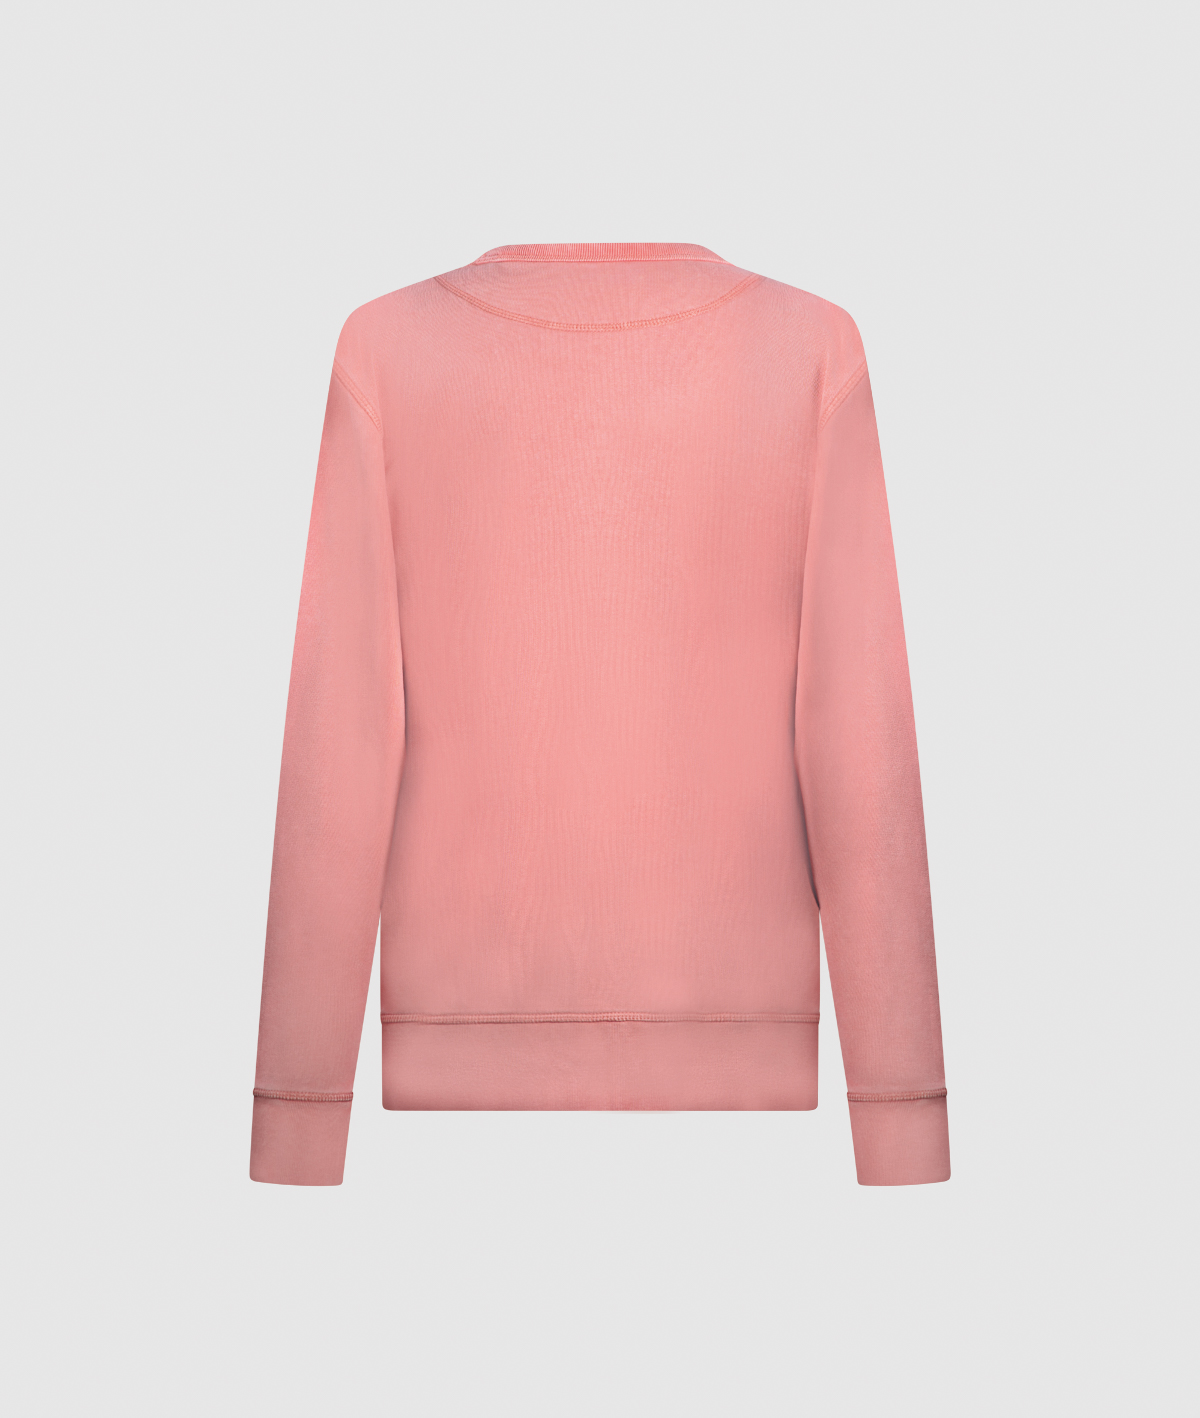 Joiner Vintage Women´s Sweatshirt IE University. dyed aged rose colour back